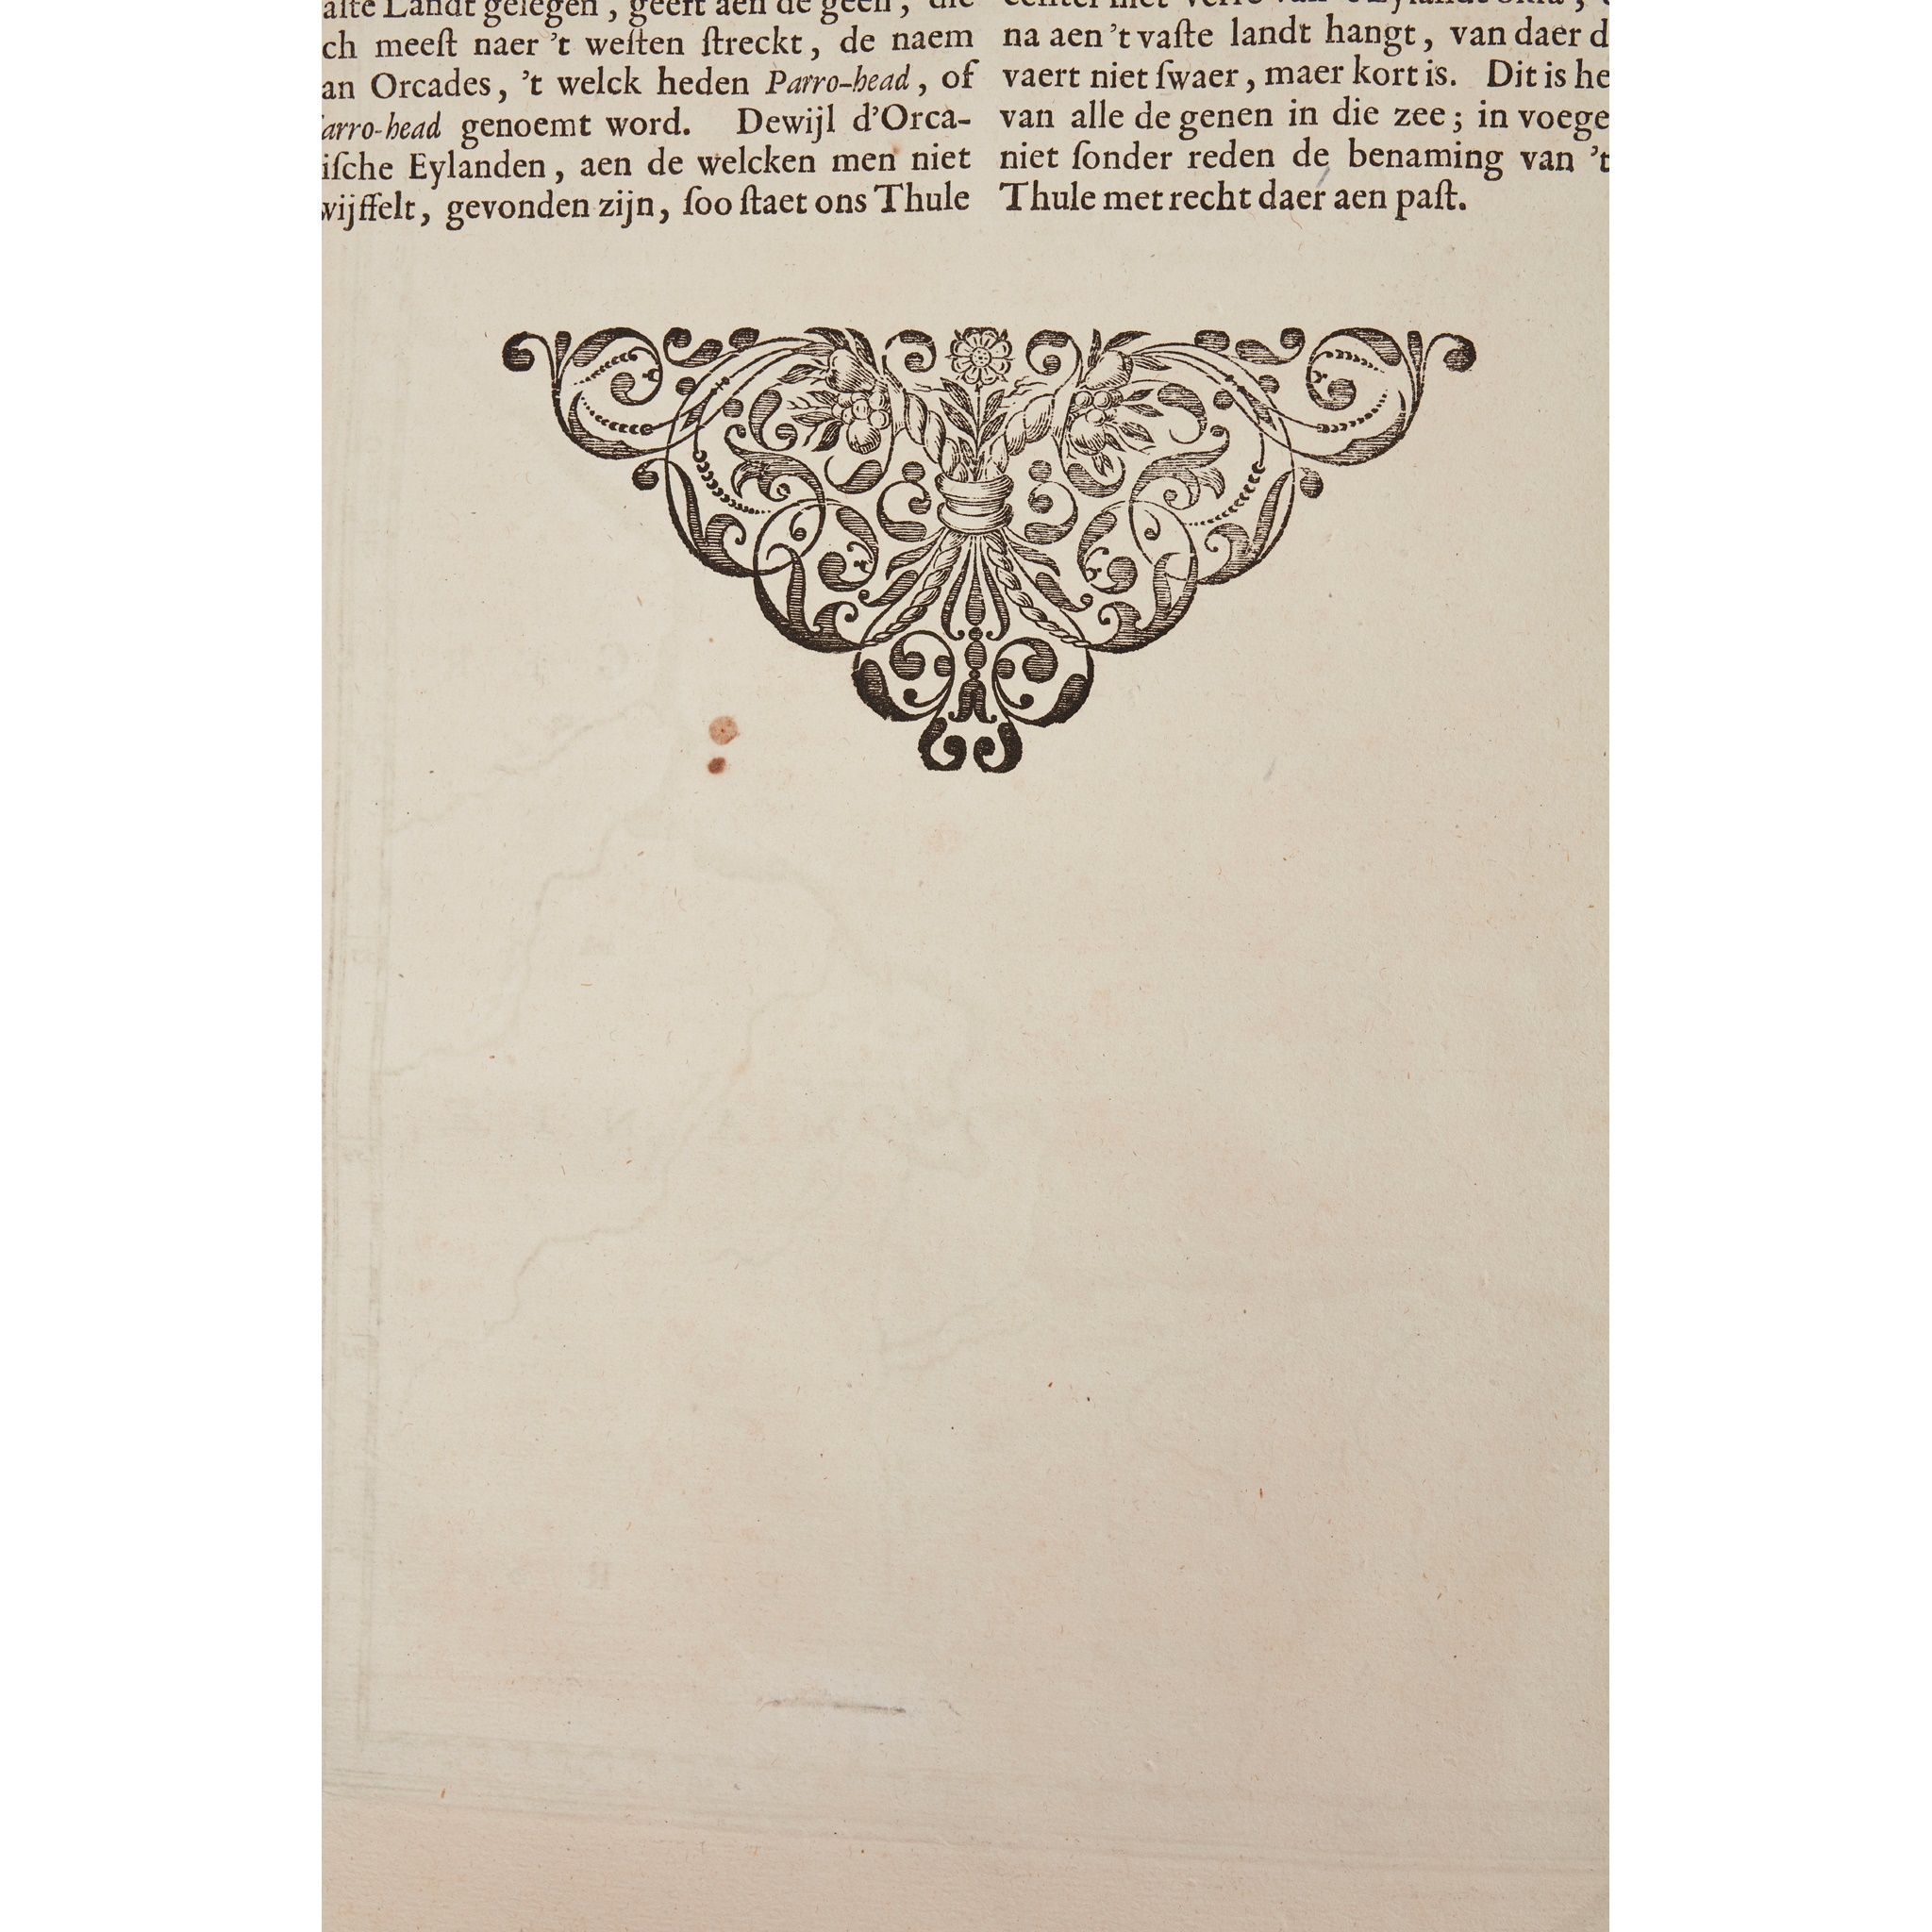 Blaeu, Joan Toonneel des Aerdryck oft Nieuwe Atlas...Vyfde Deel [Theatrum Orbis Terrarum, part V] - Image 5 of 25